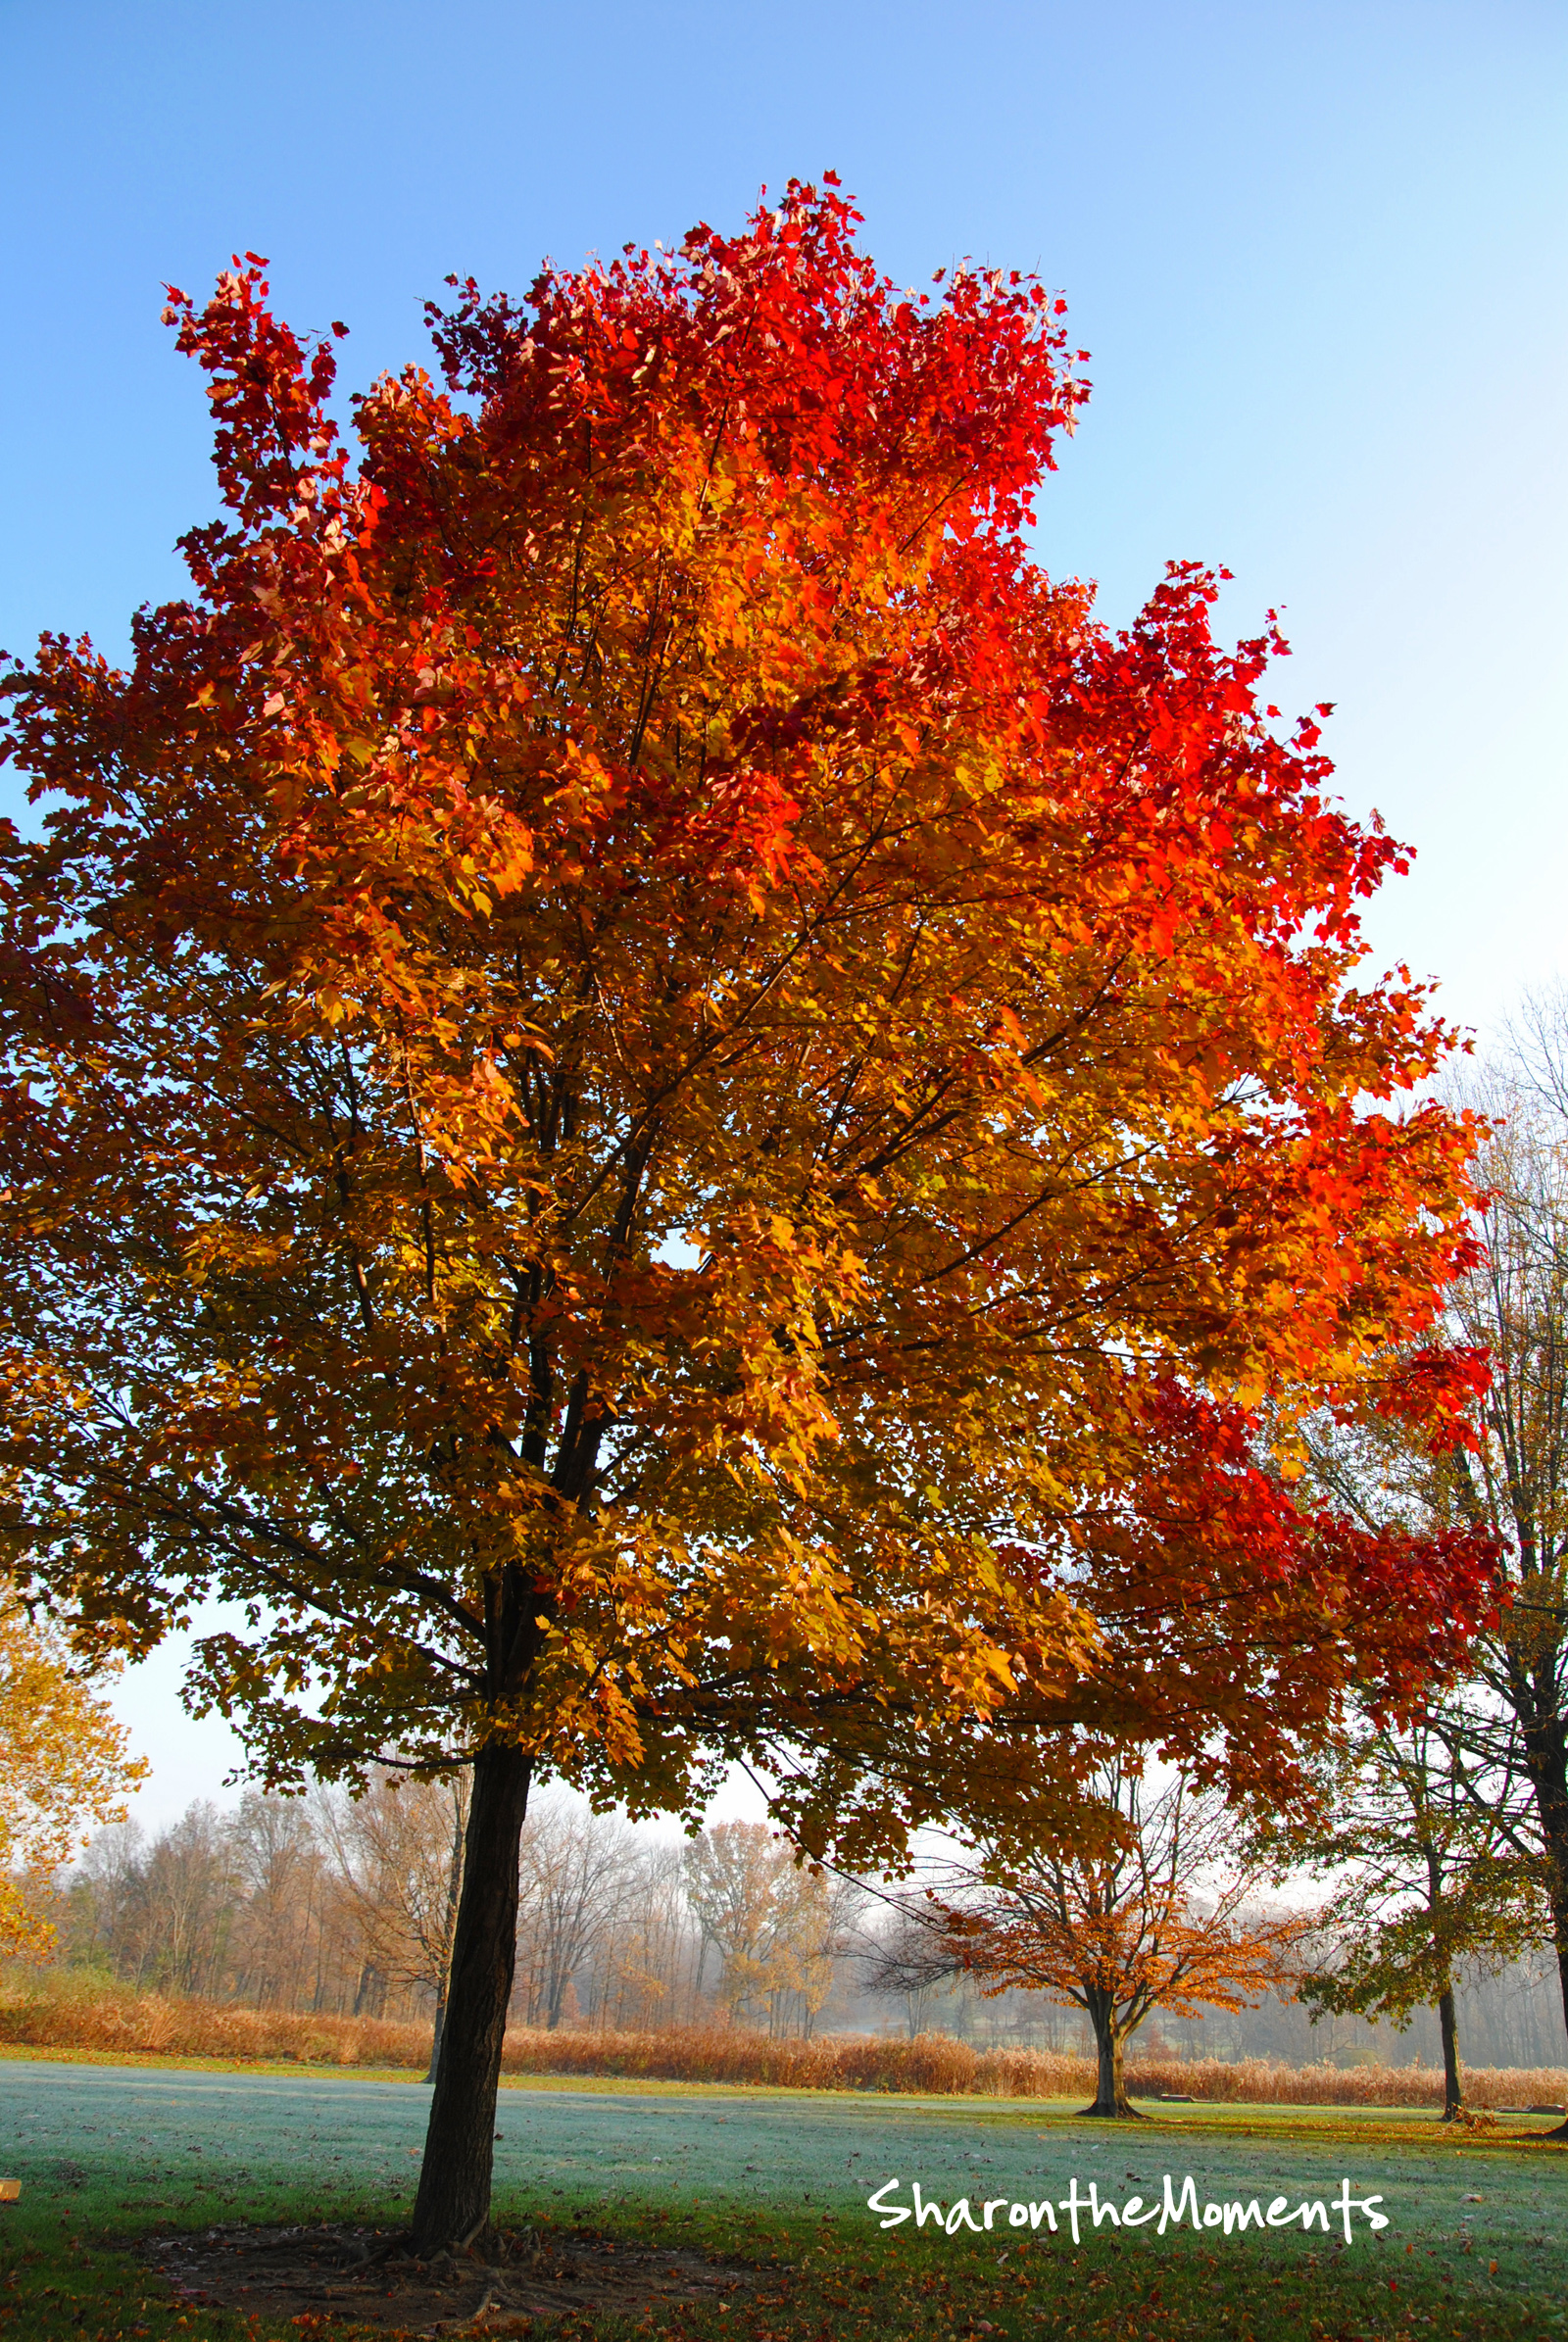 Favorite Photo Friday Autumn Follage at Sharon Woods Metro Park|Sharon the Moments blog